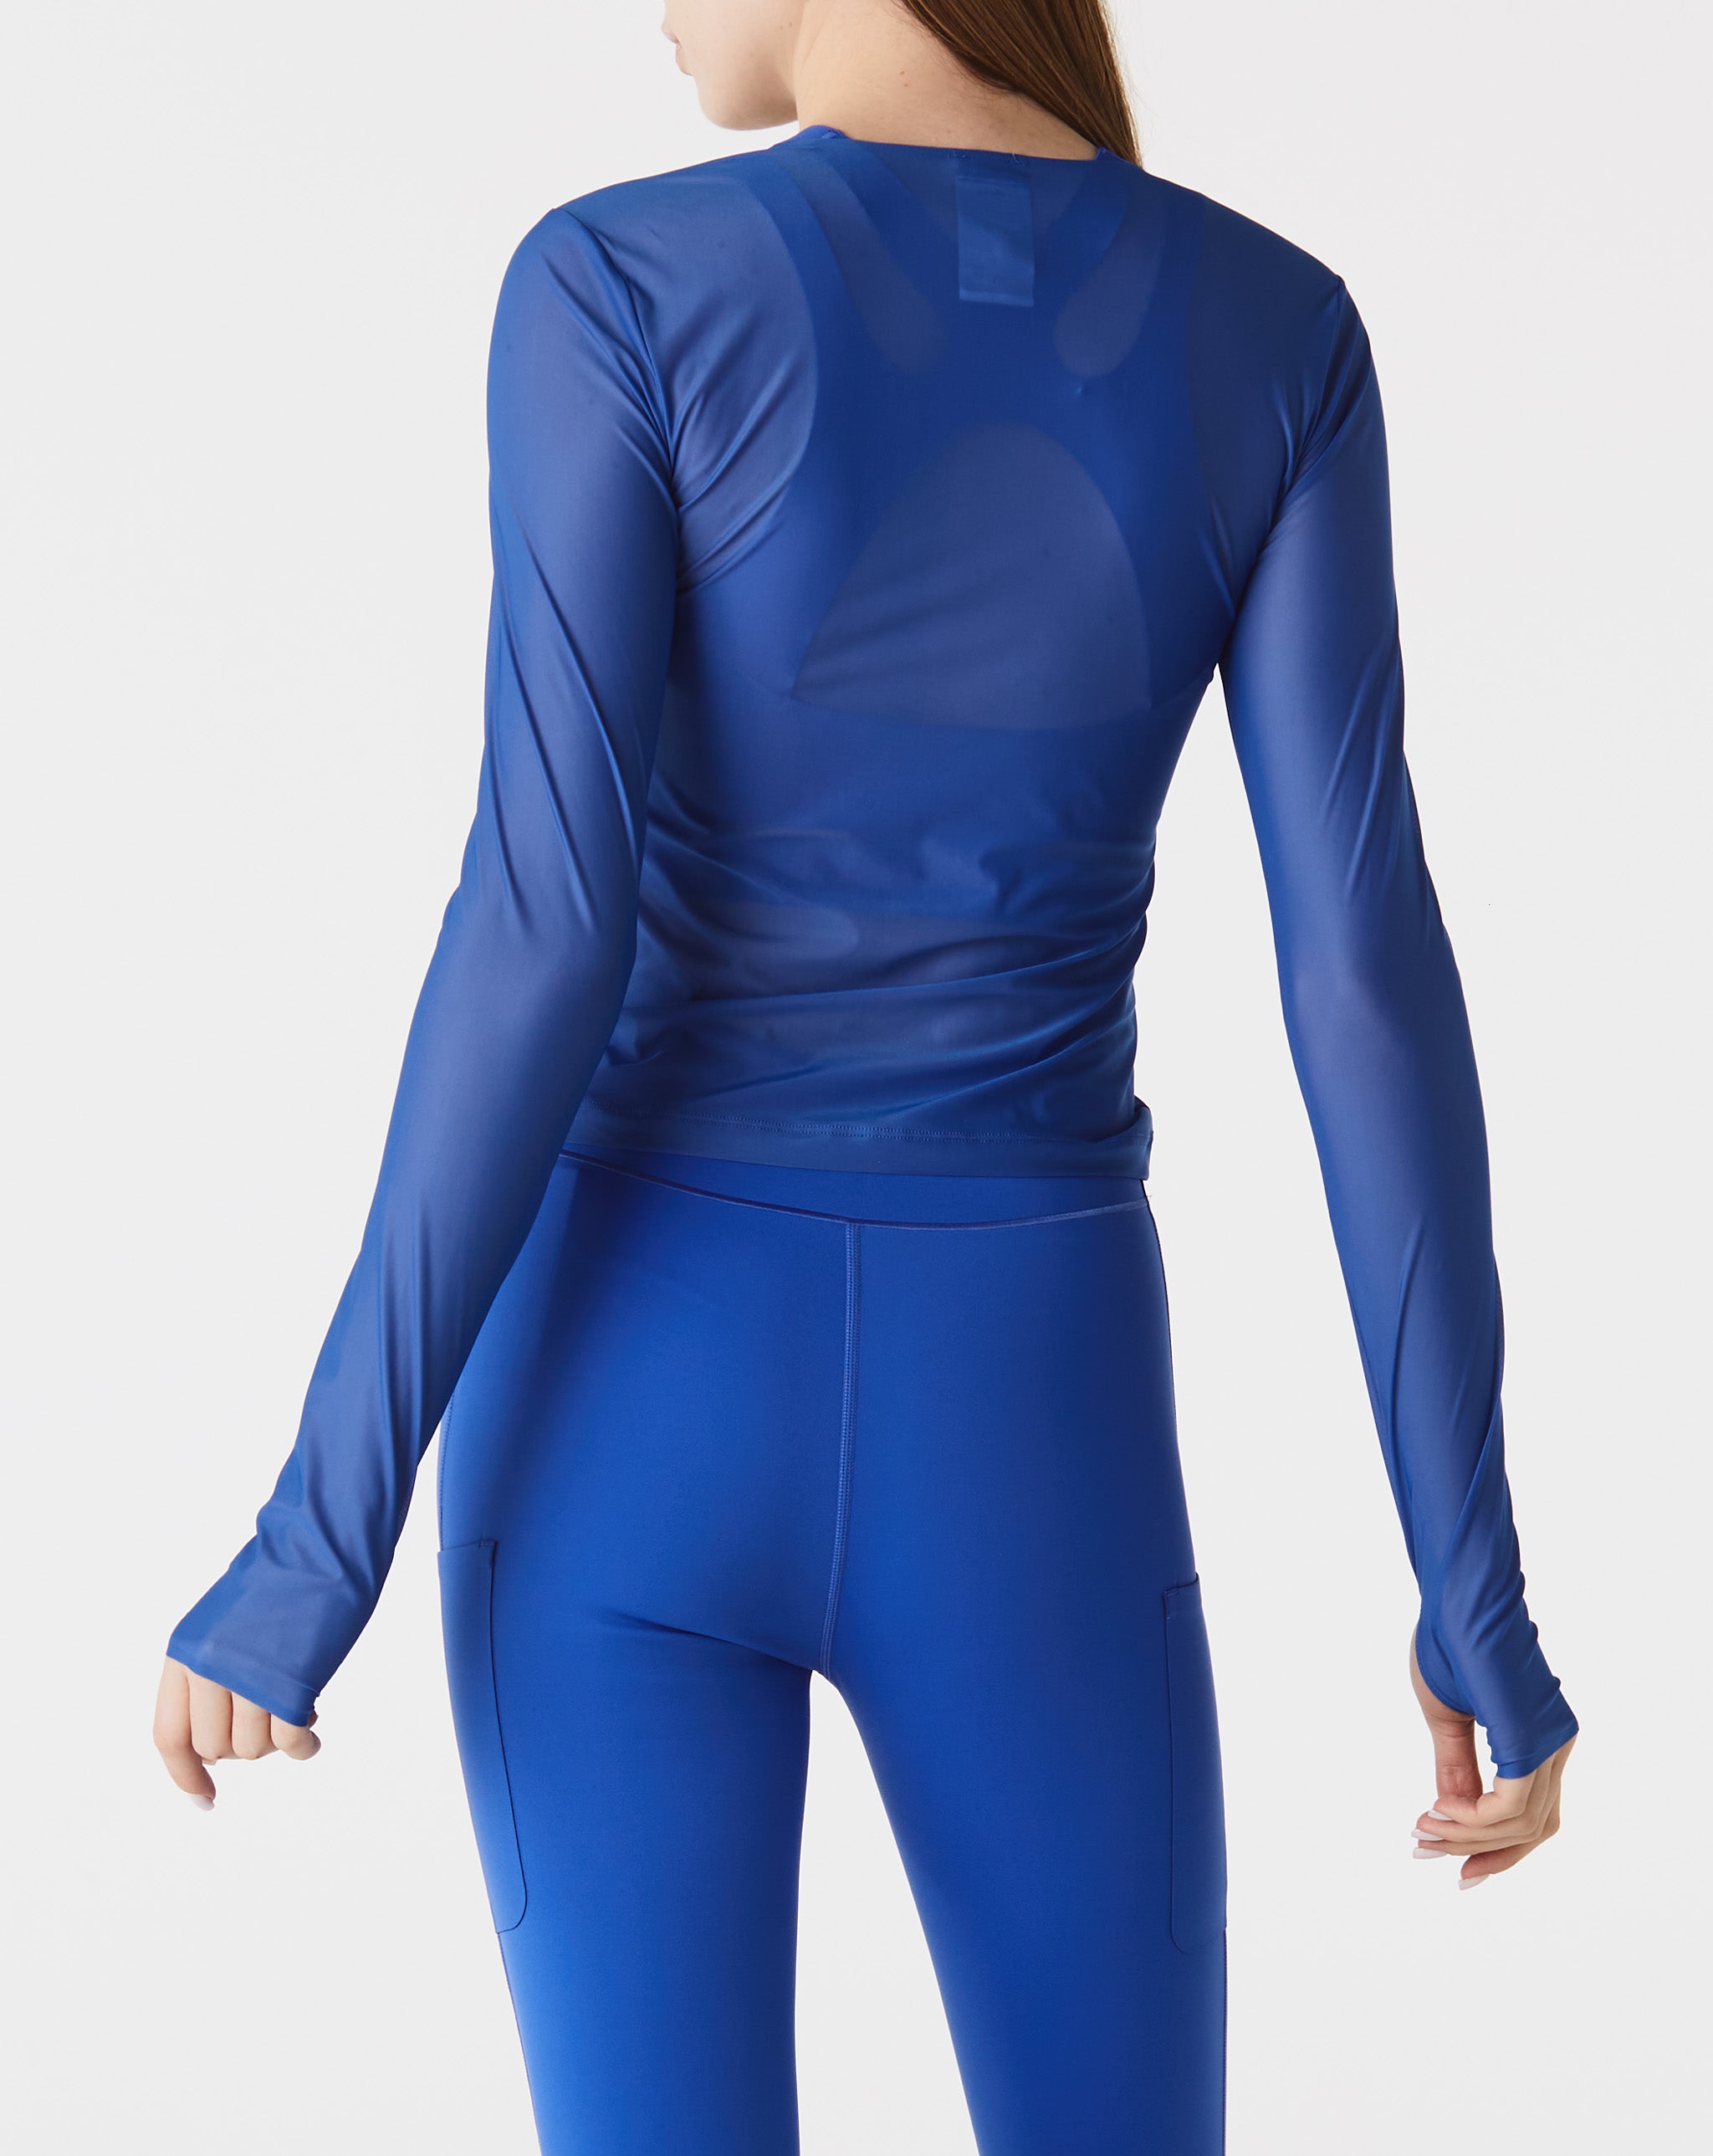 Nike Women's FutureMove Dri-FIT Long-Sleeve Sheer Top  - Cheap Cerbe Jordan outlet